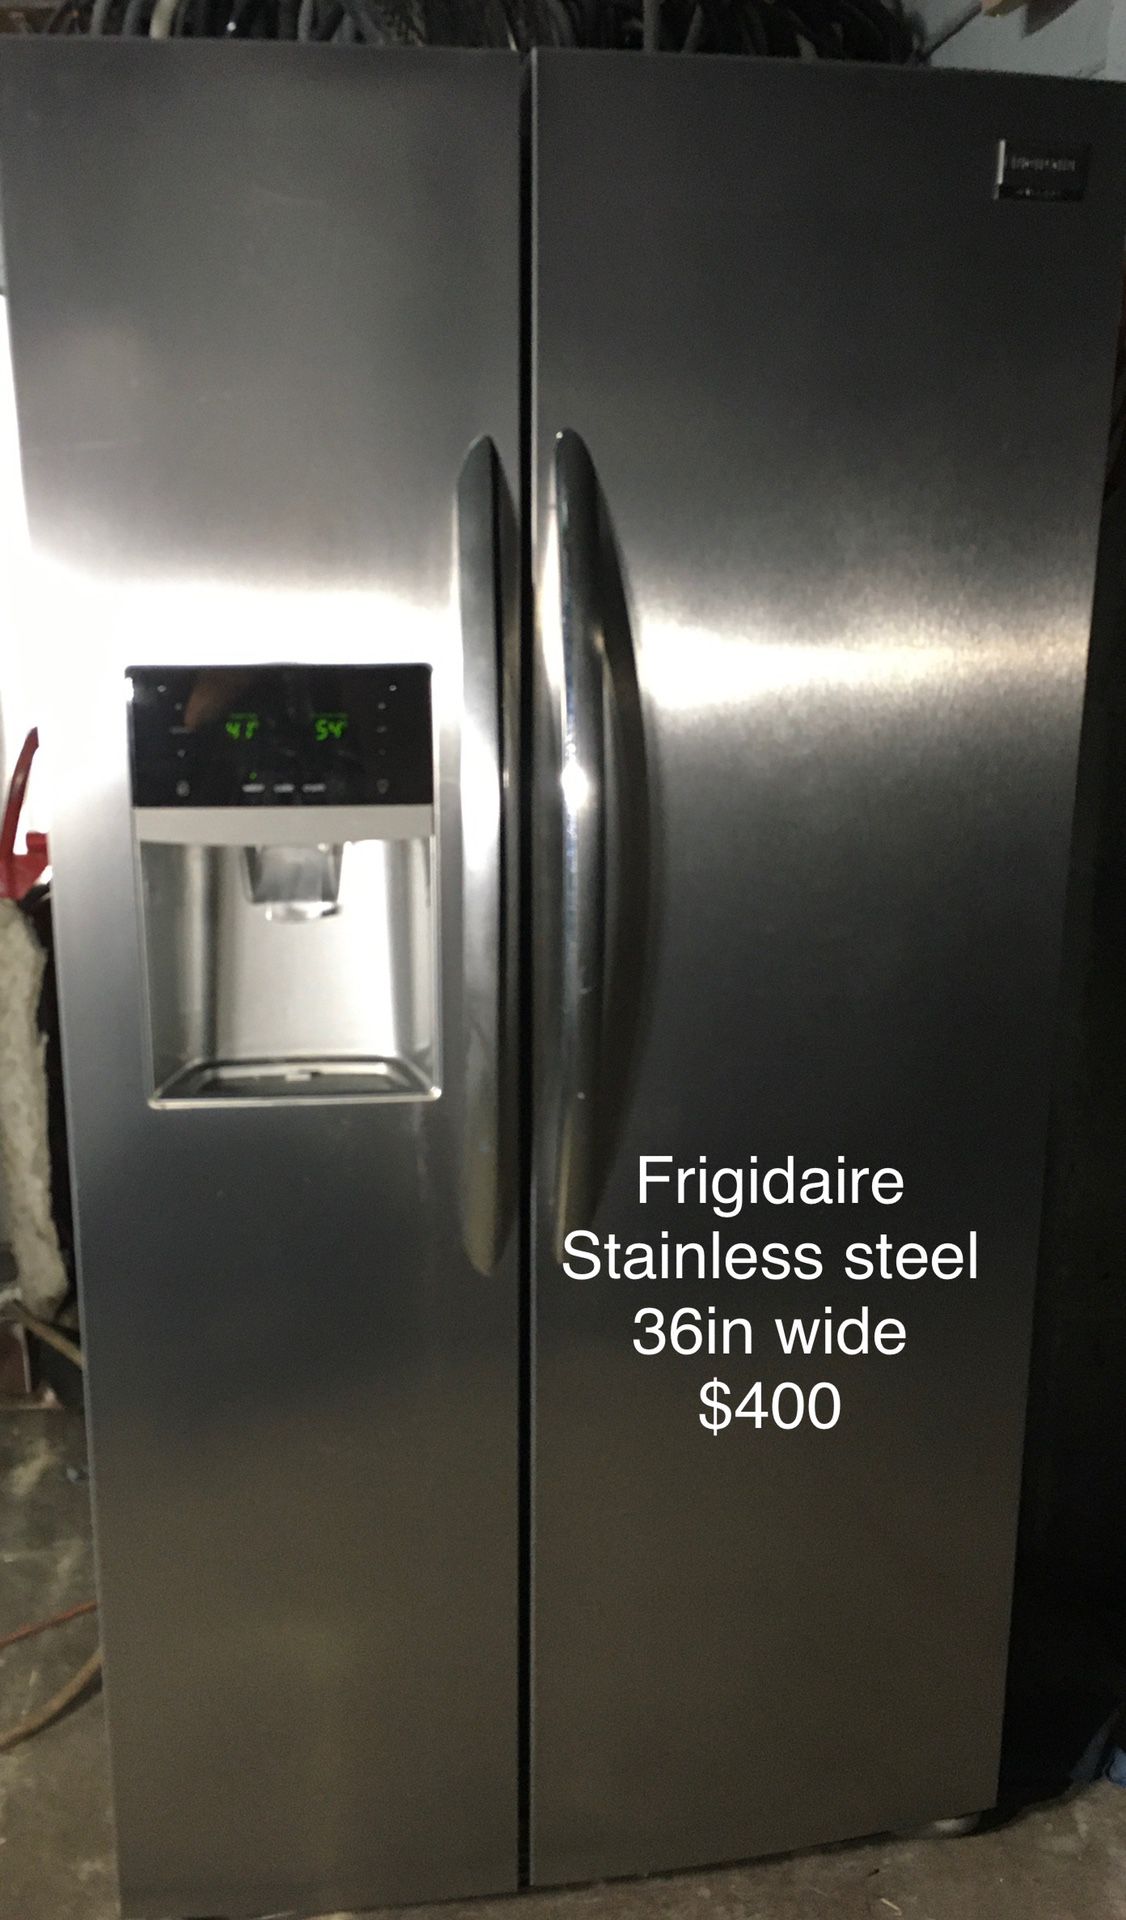 Frigidaire stainless steel fridge refrigerator / nevera refrigerador